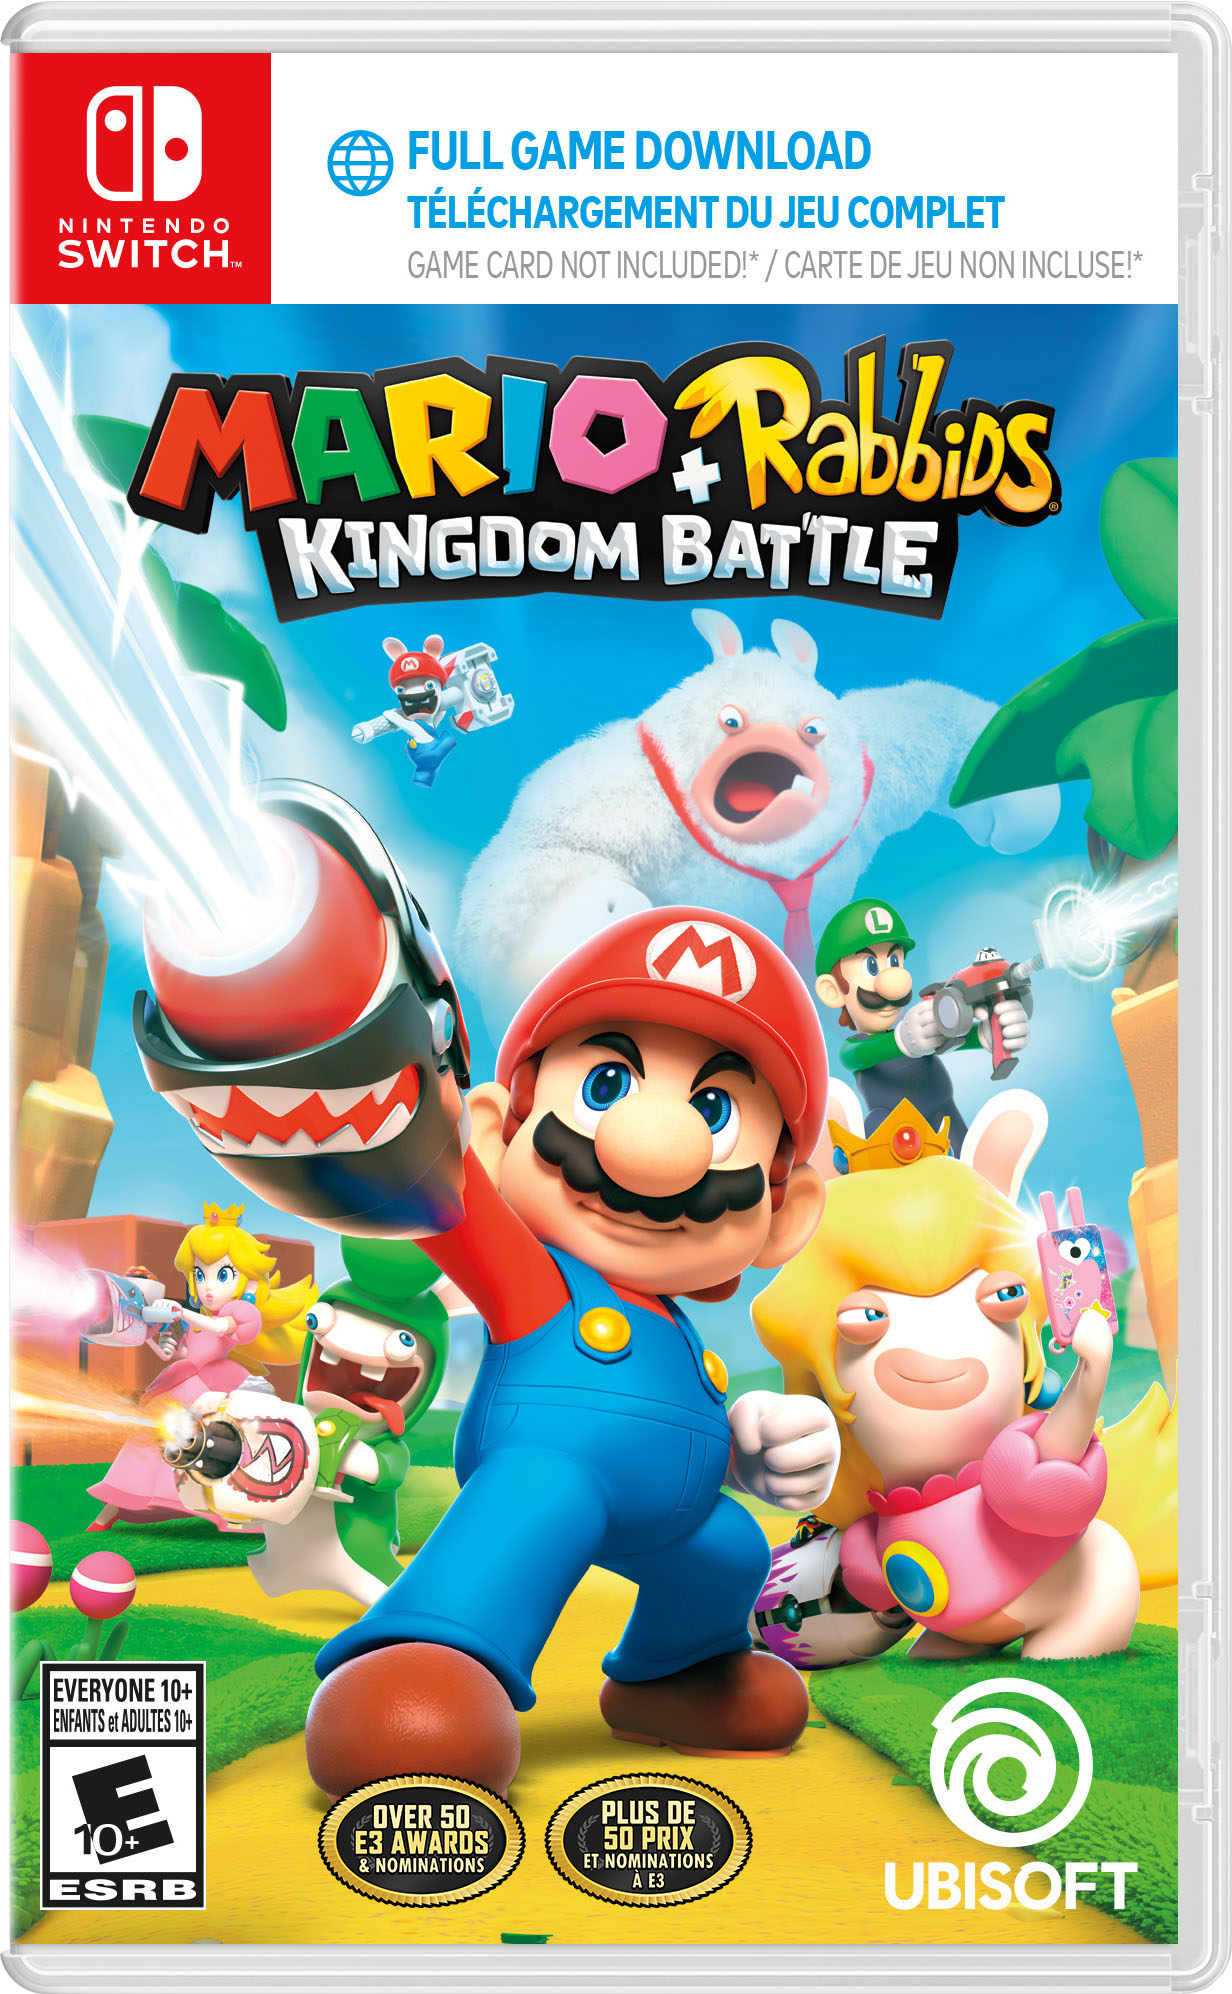 SUPER MARIO + RABBIDS KINGDOM BATTLE - Nintendo Switch Game COMPLETE